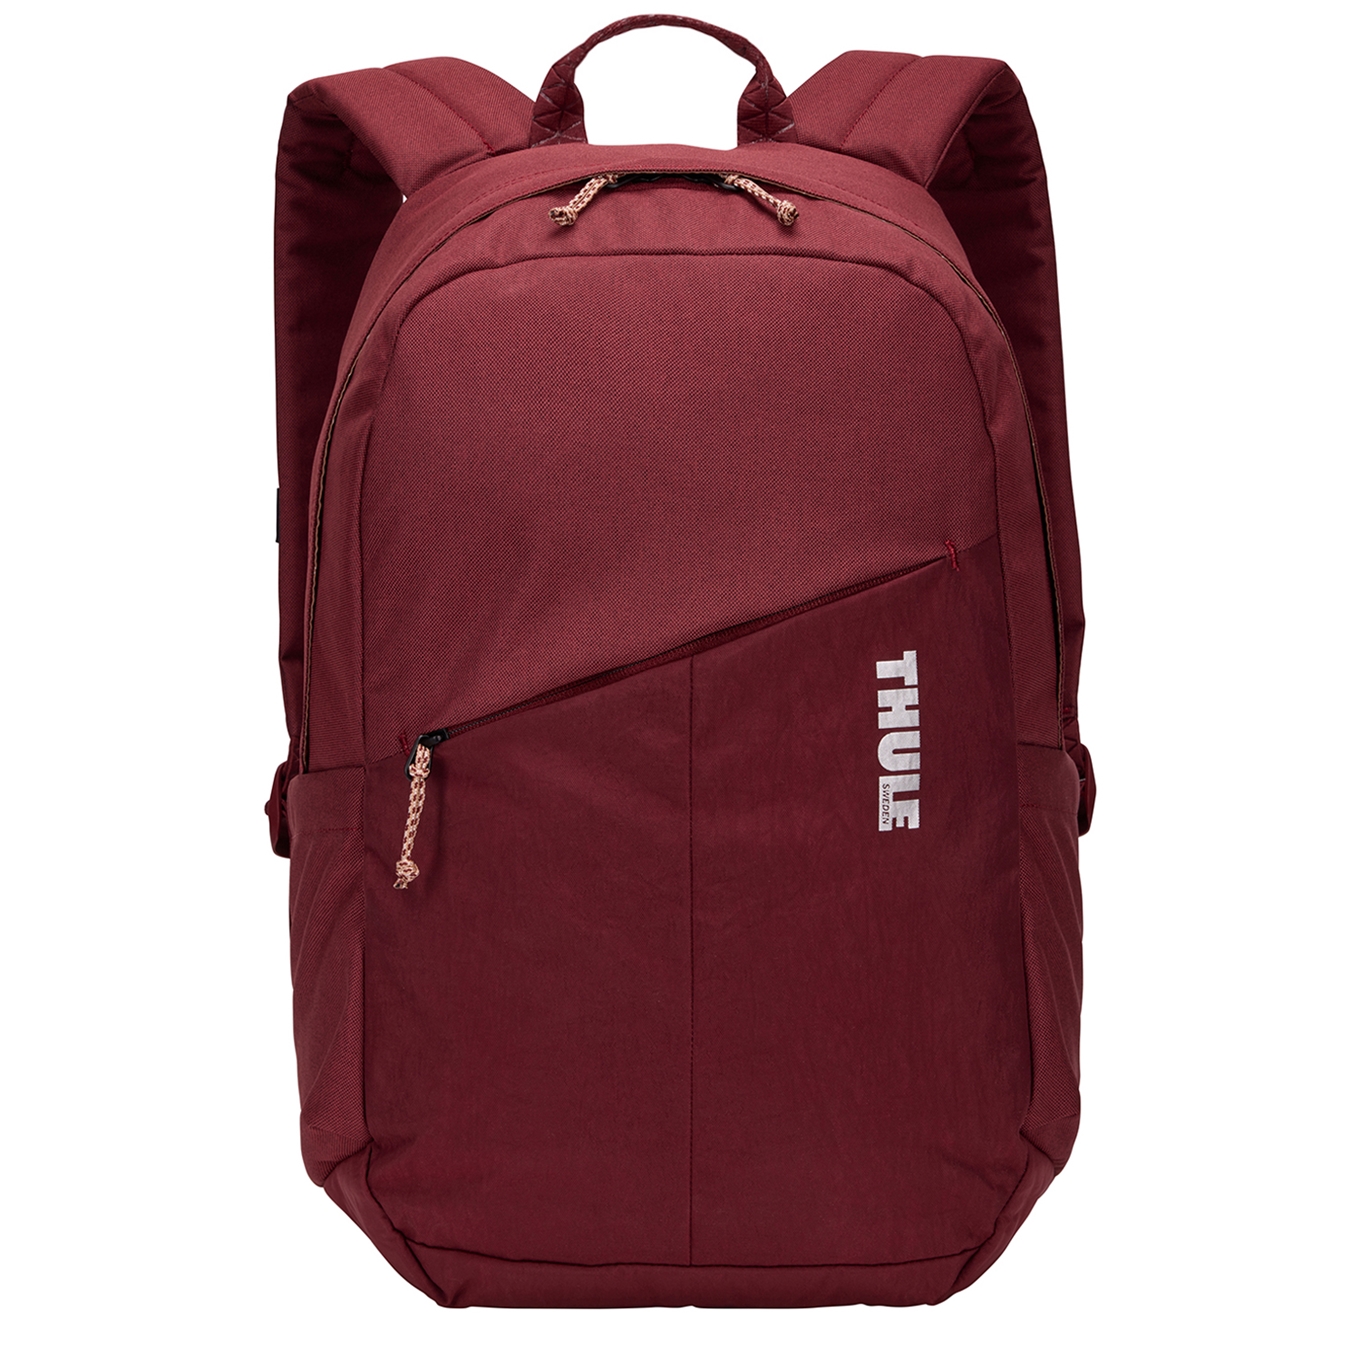 Thule Campus Notus Backpack 20L new maroon backpack